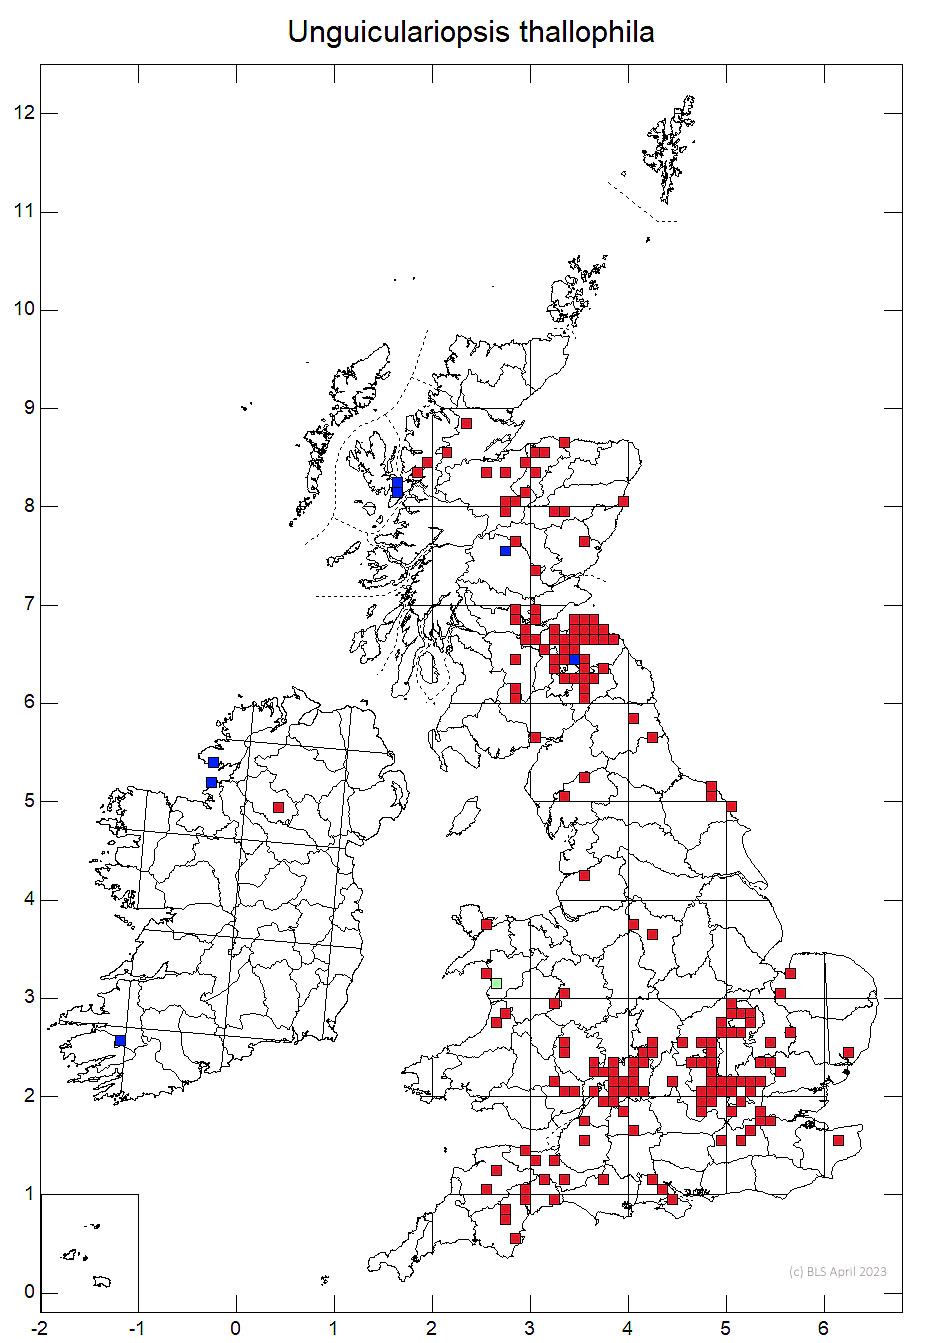 Unguiculariopsis thallophila 10km sq distribution map